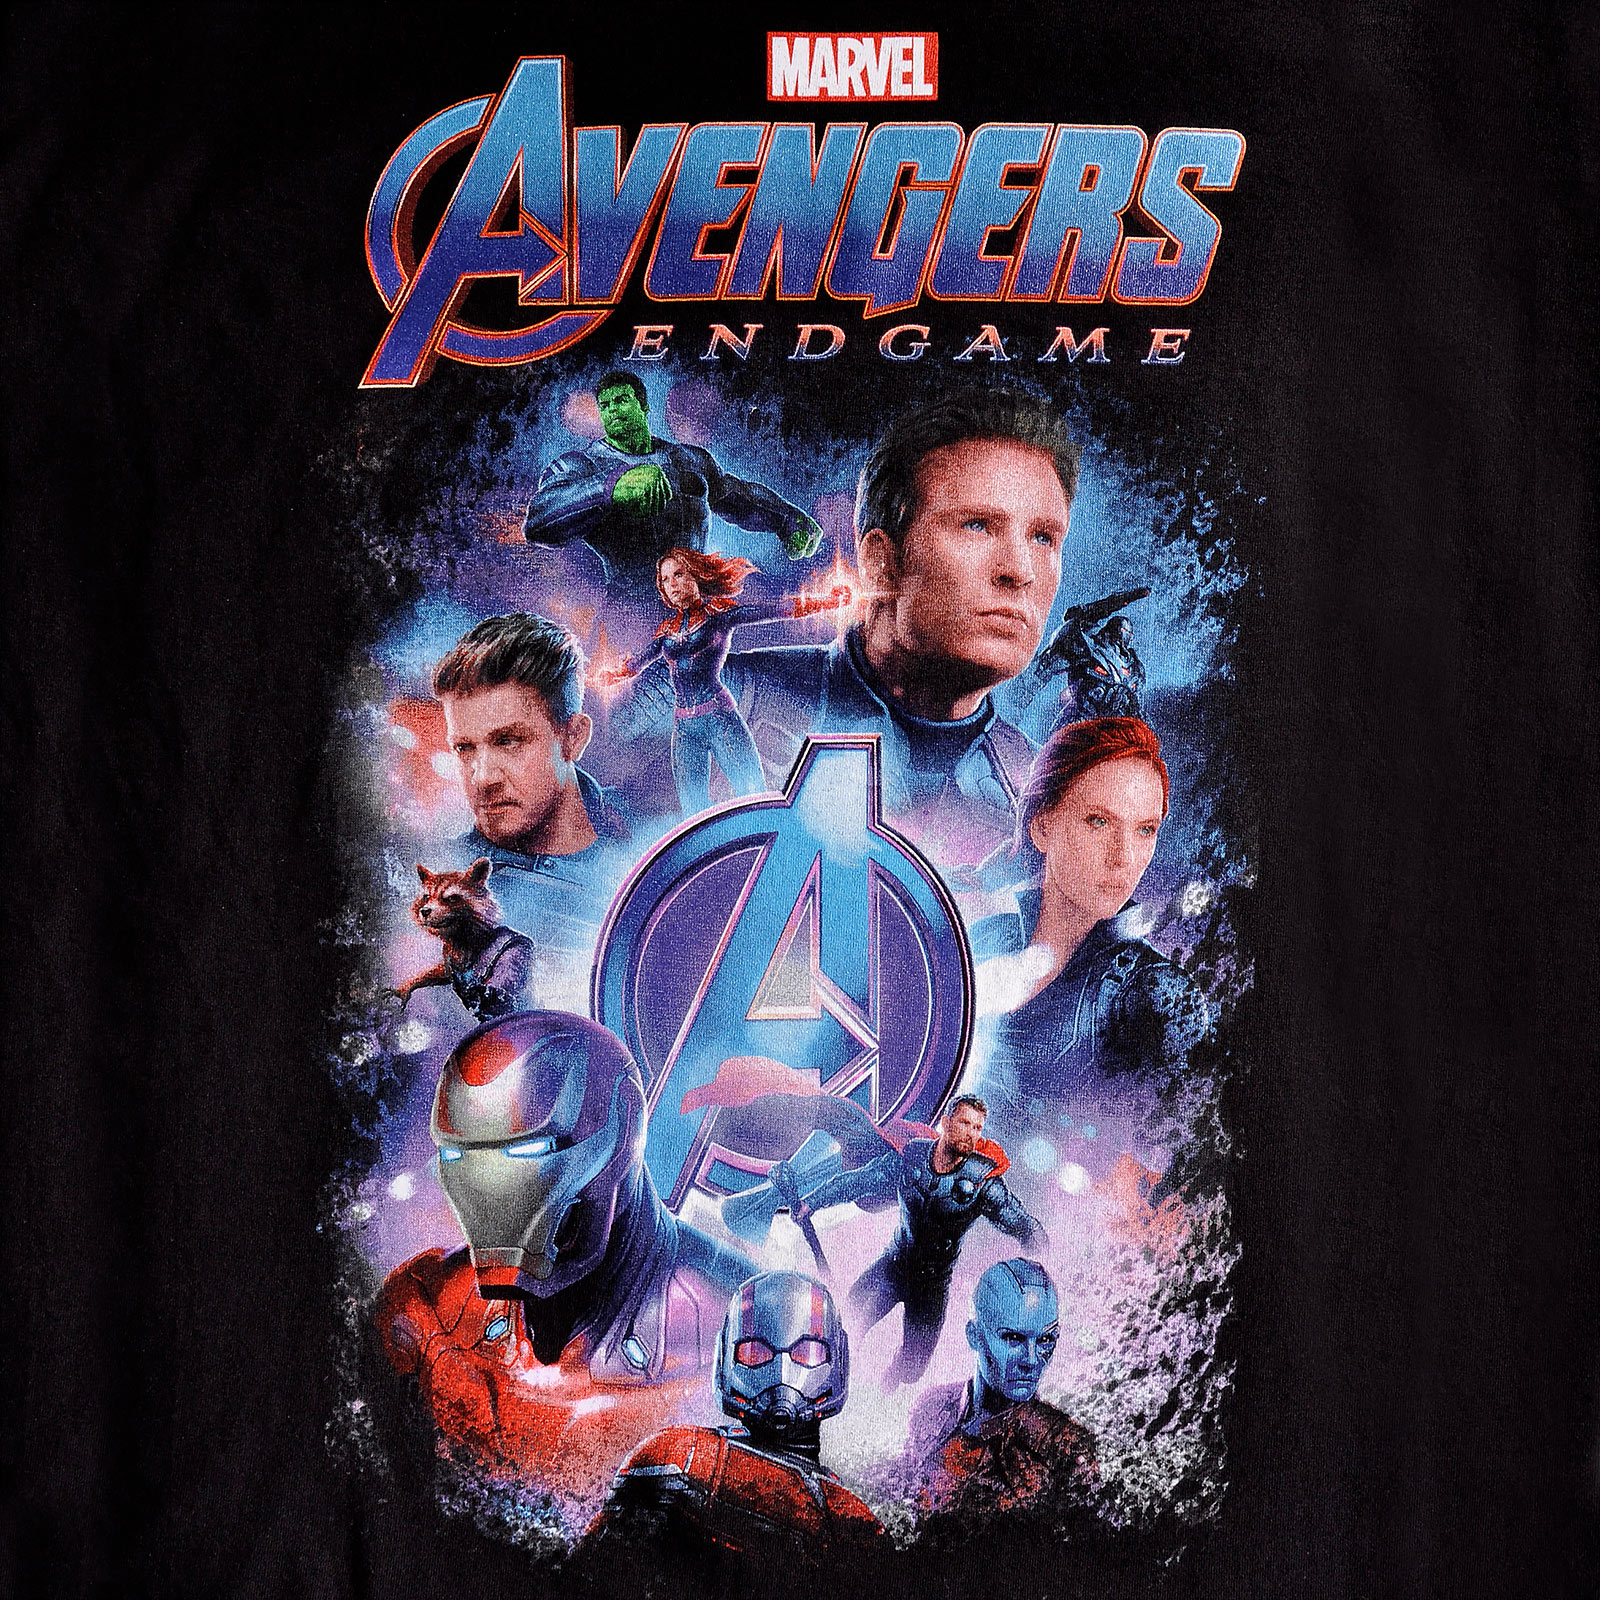 Avengers - Endgame Collage T-Shirt schwarz